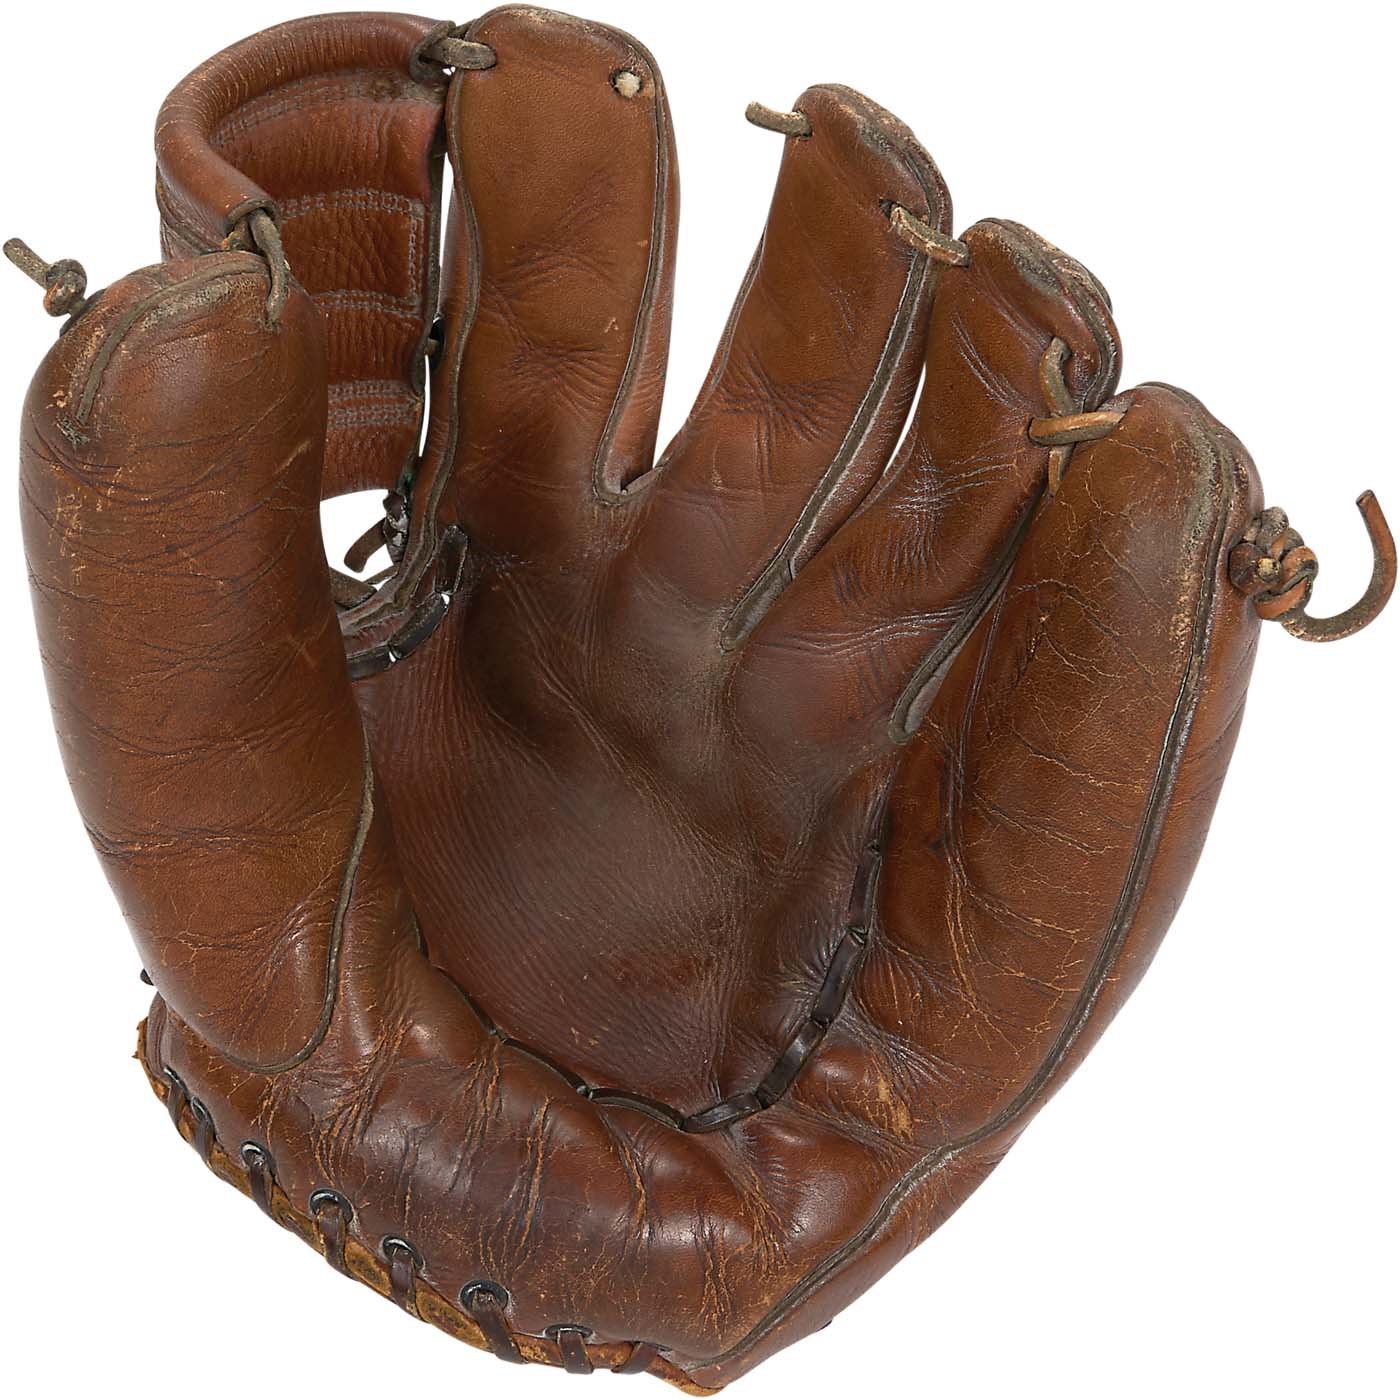 - Circa 1955 Ted Williams Game Used Glove